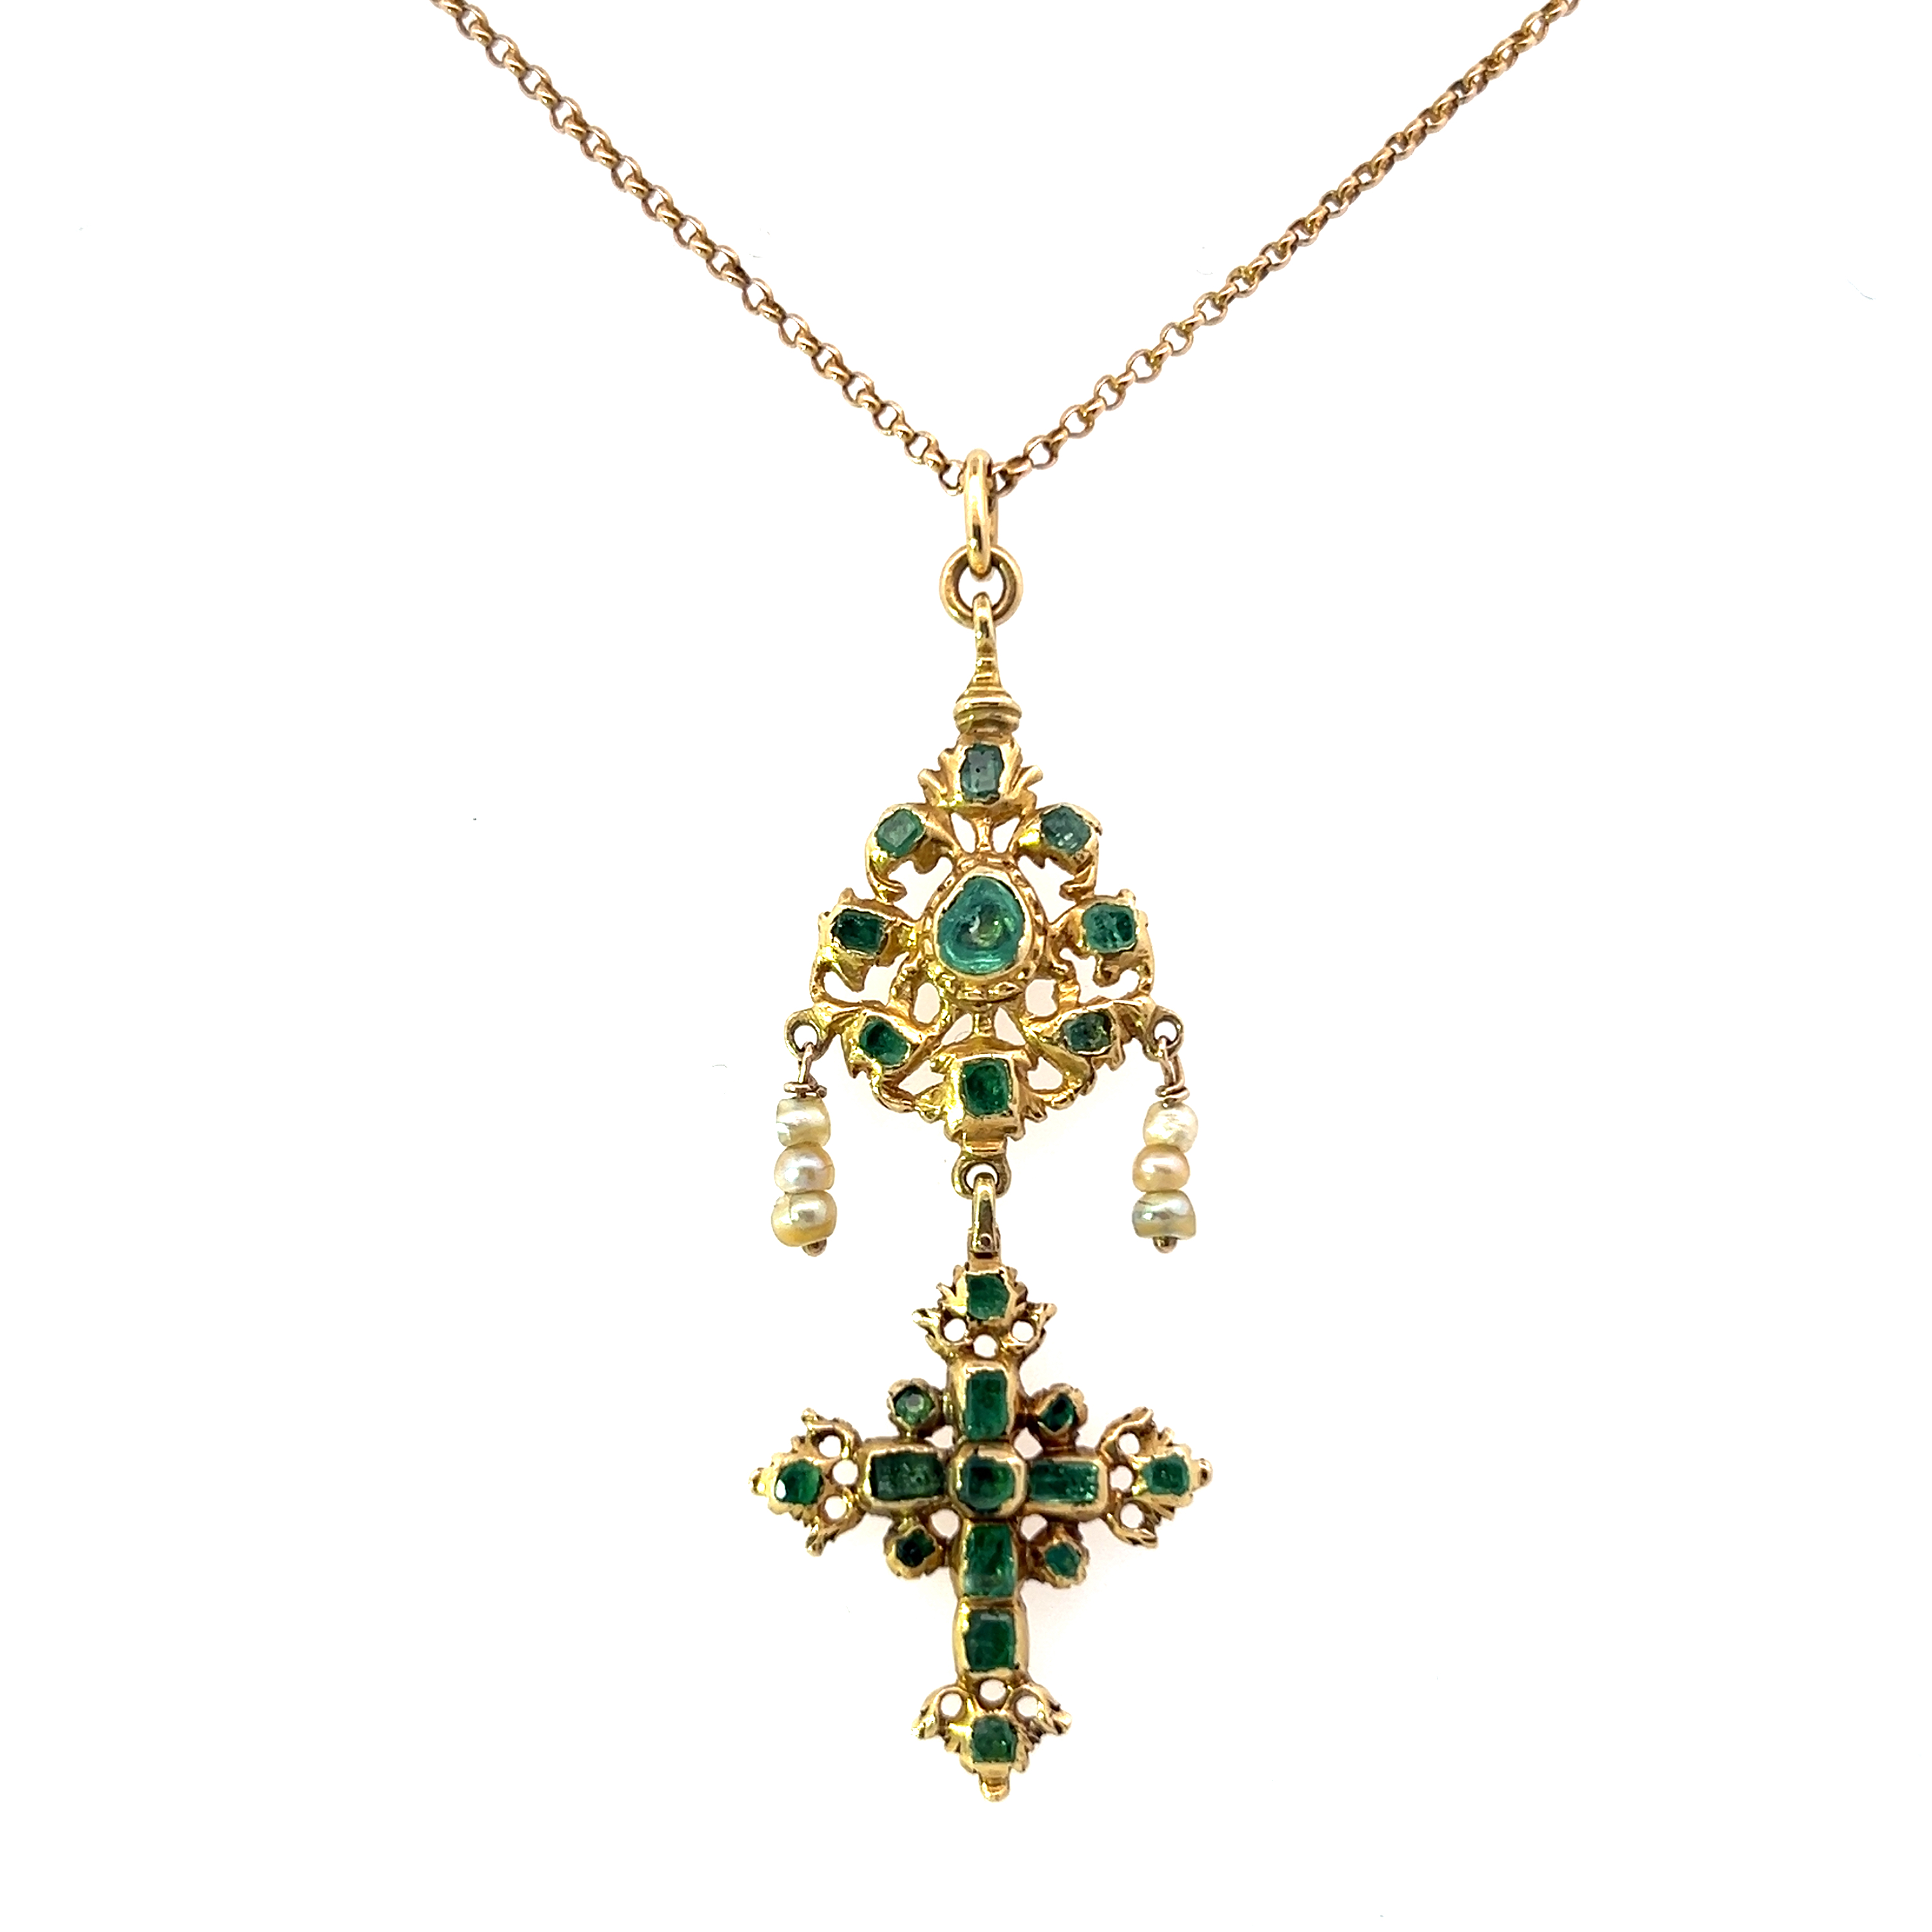 A Stunning Emerald Pendant